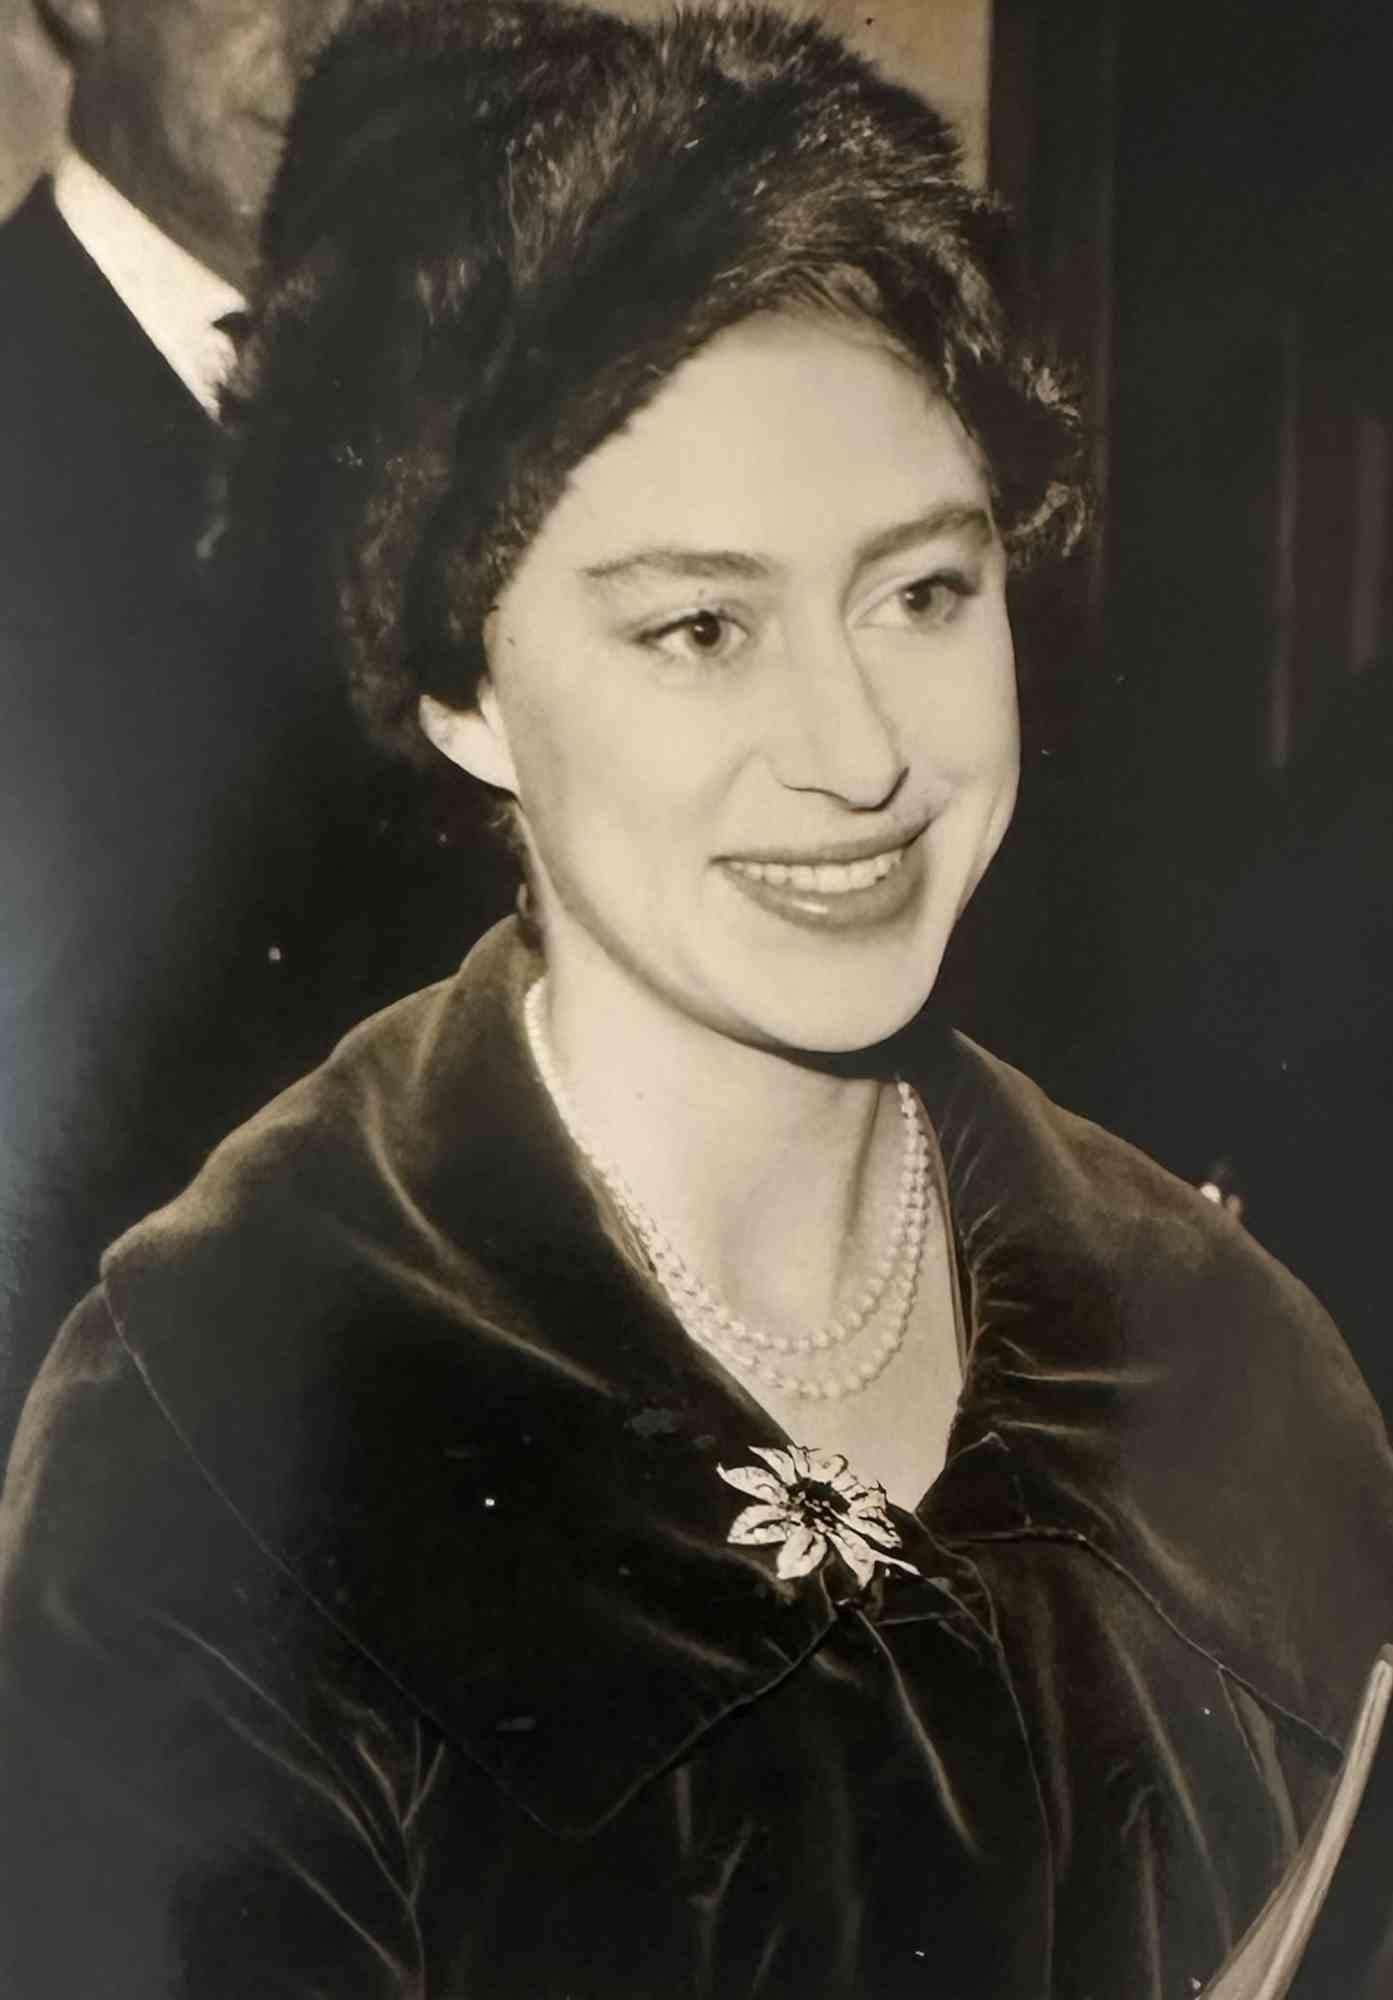 Unknown Figurative Photograph - Historical  Photo - Queen Elizabeth - Vintage Photo - Mid-20th Century